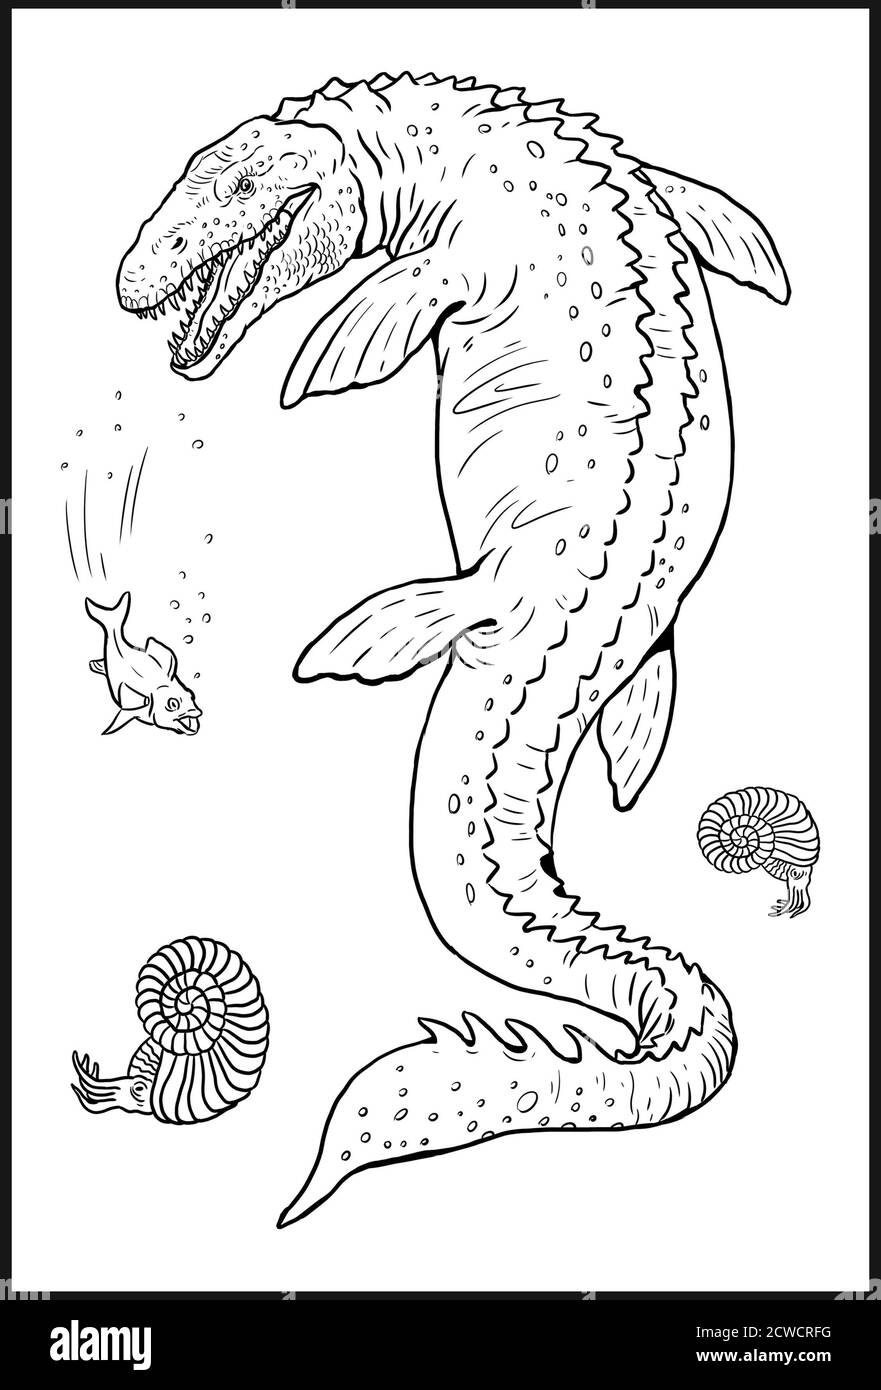 Reptile aquatique préhistorique - Mosasaurus. Dinosaure aquatique. Page de coloriage. Banque D'Images